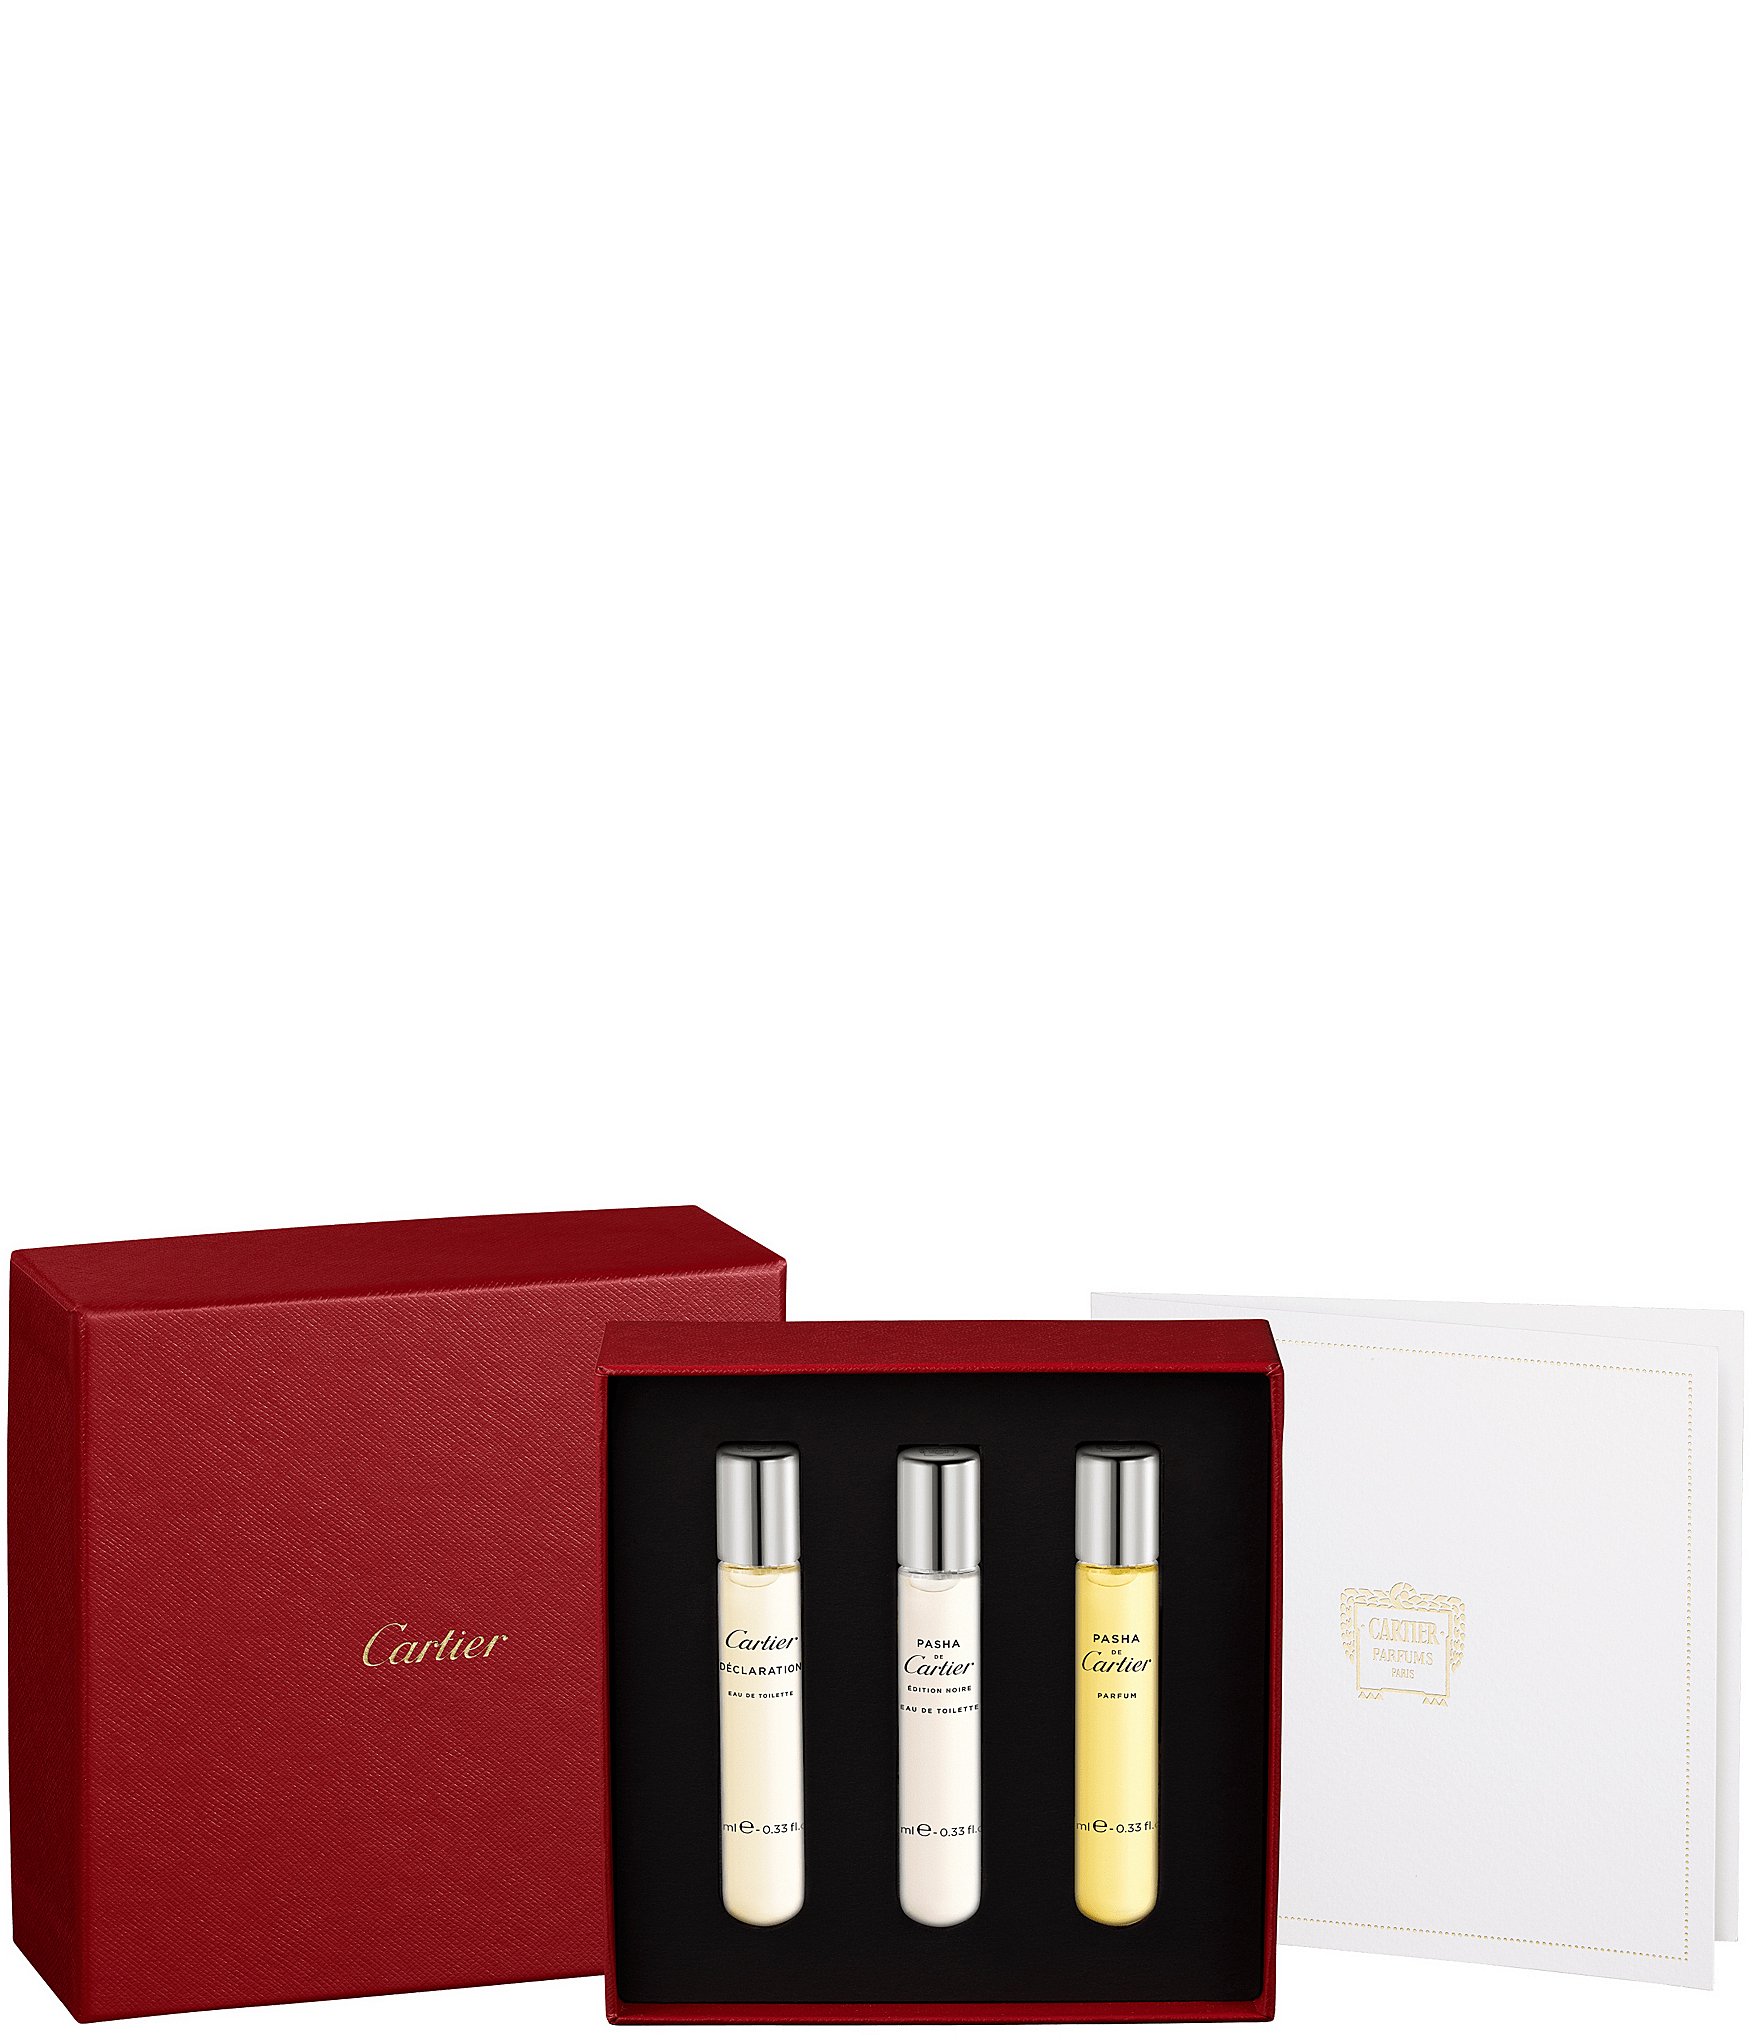 Fragrance Gift Set - Pasha De Cartier